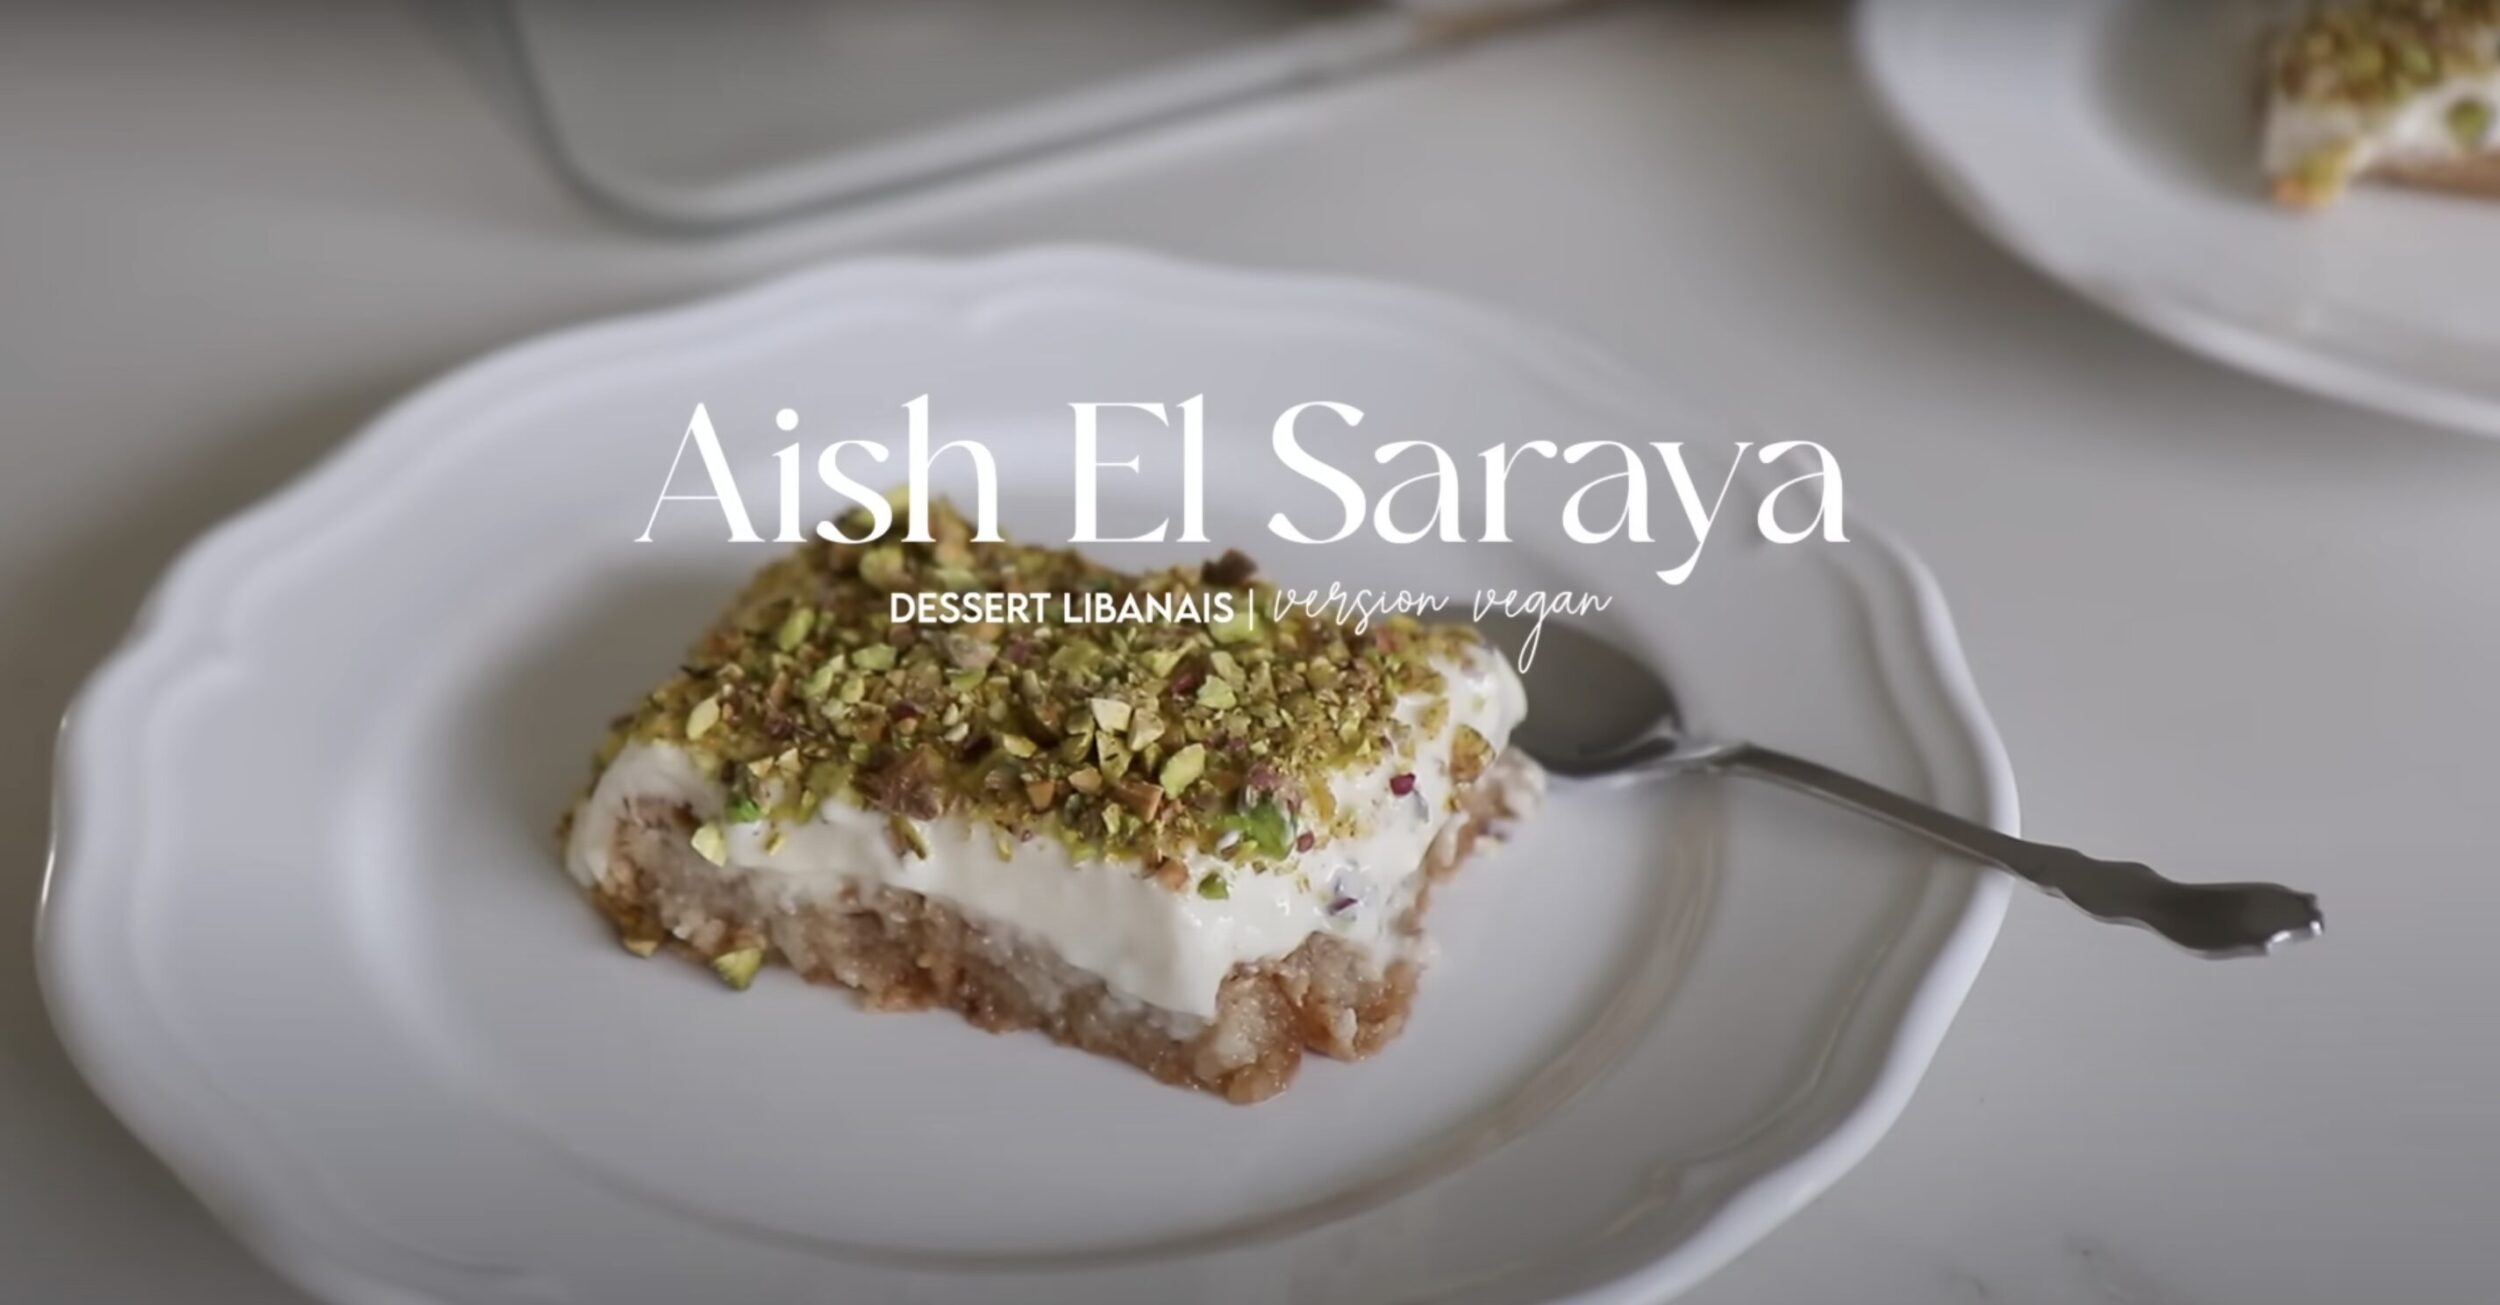 Les étapes pour réussir la recette d’Aish El Saraya vegan d’Alice Esmeralda